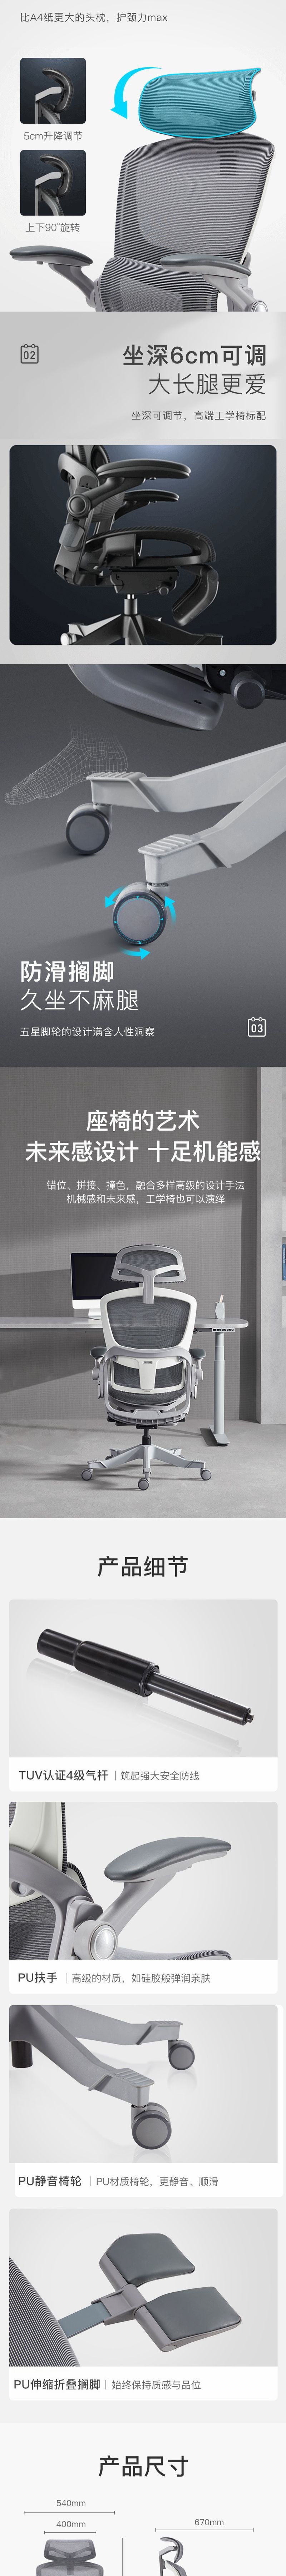 [5-7 Days U.S. Shipping]Multifunctional Ergonomic Chair